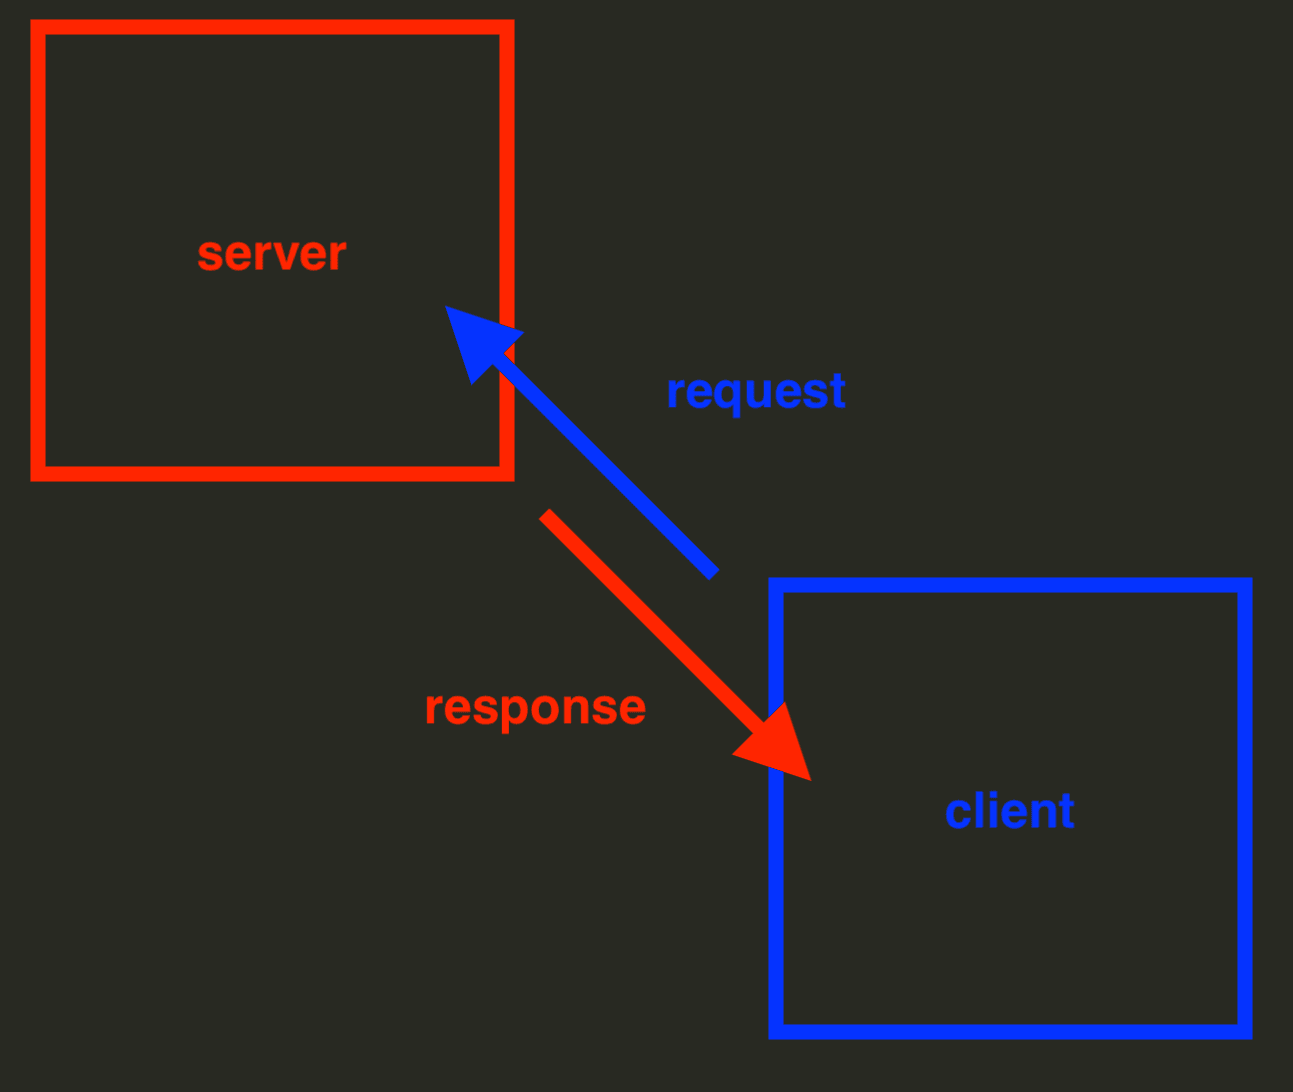 client server request response schema - image26.png